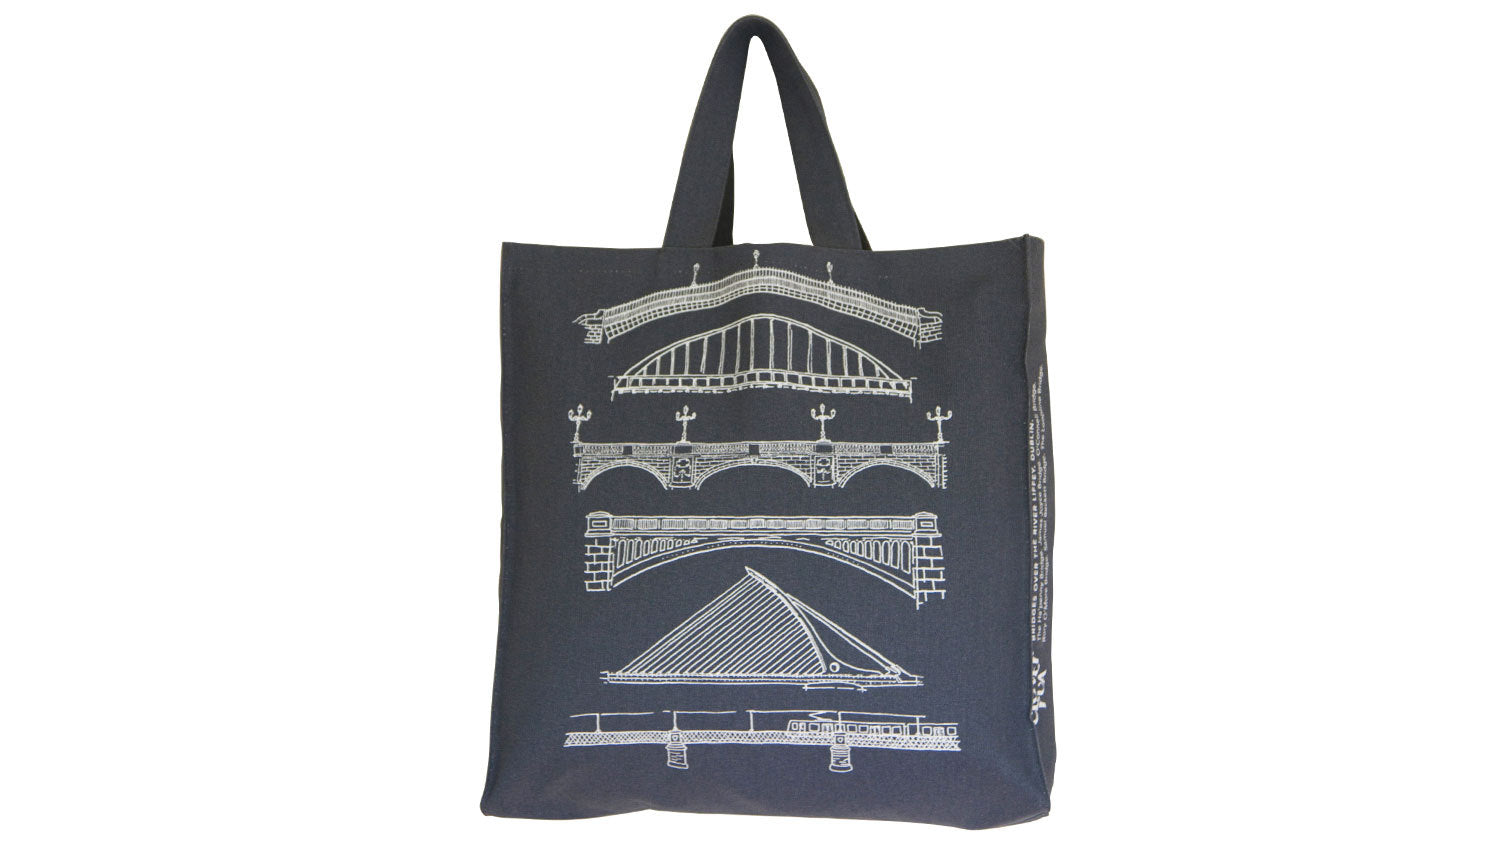 Dublin Bridges tote bag, white print on charcoal.